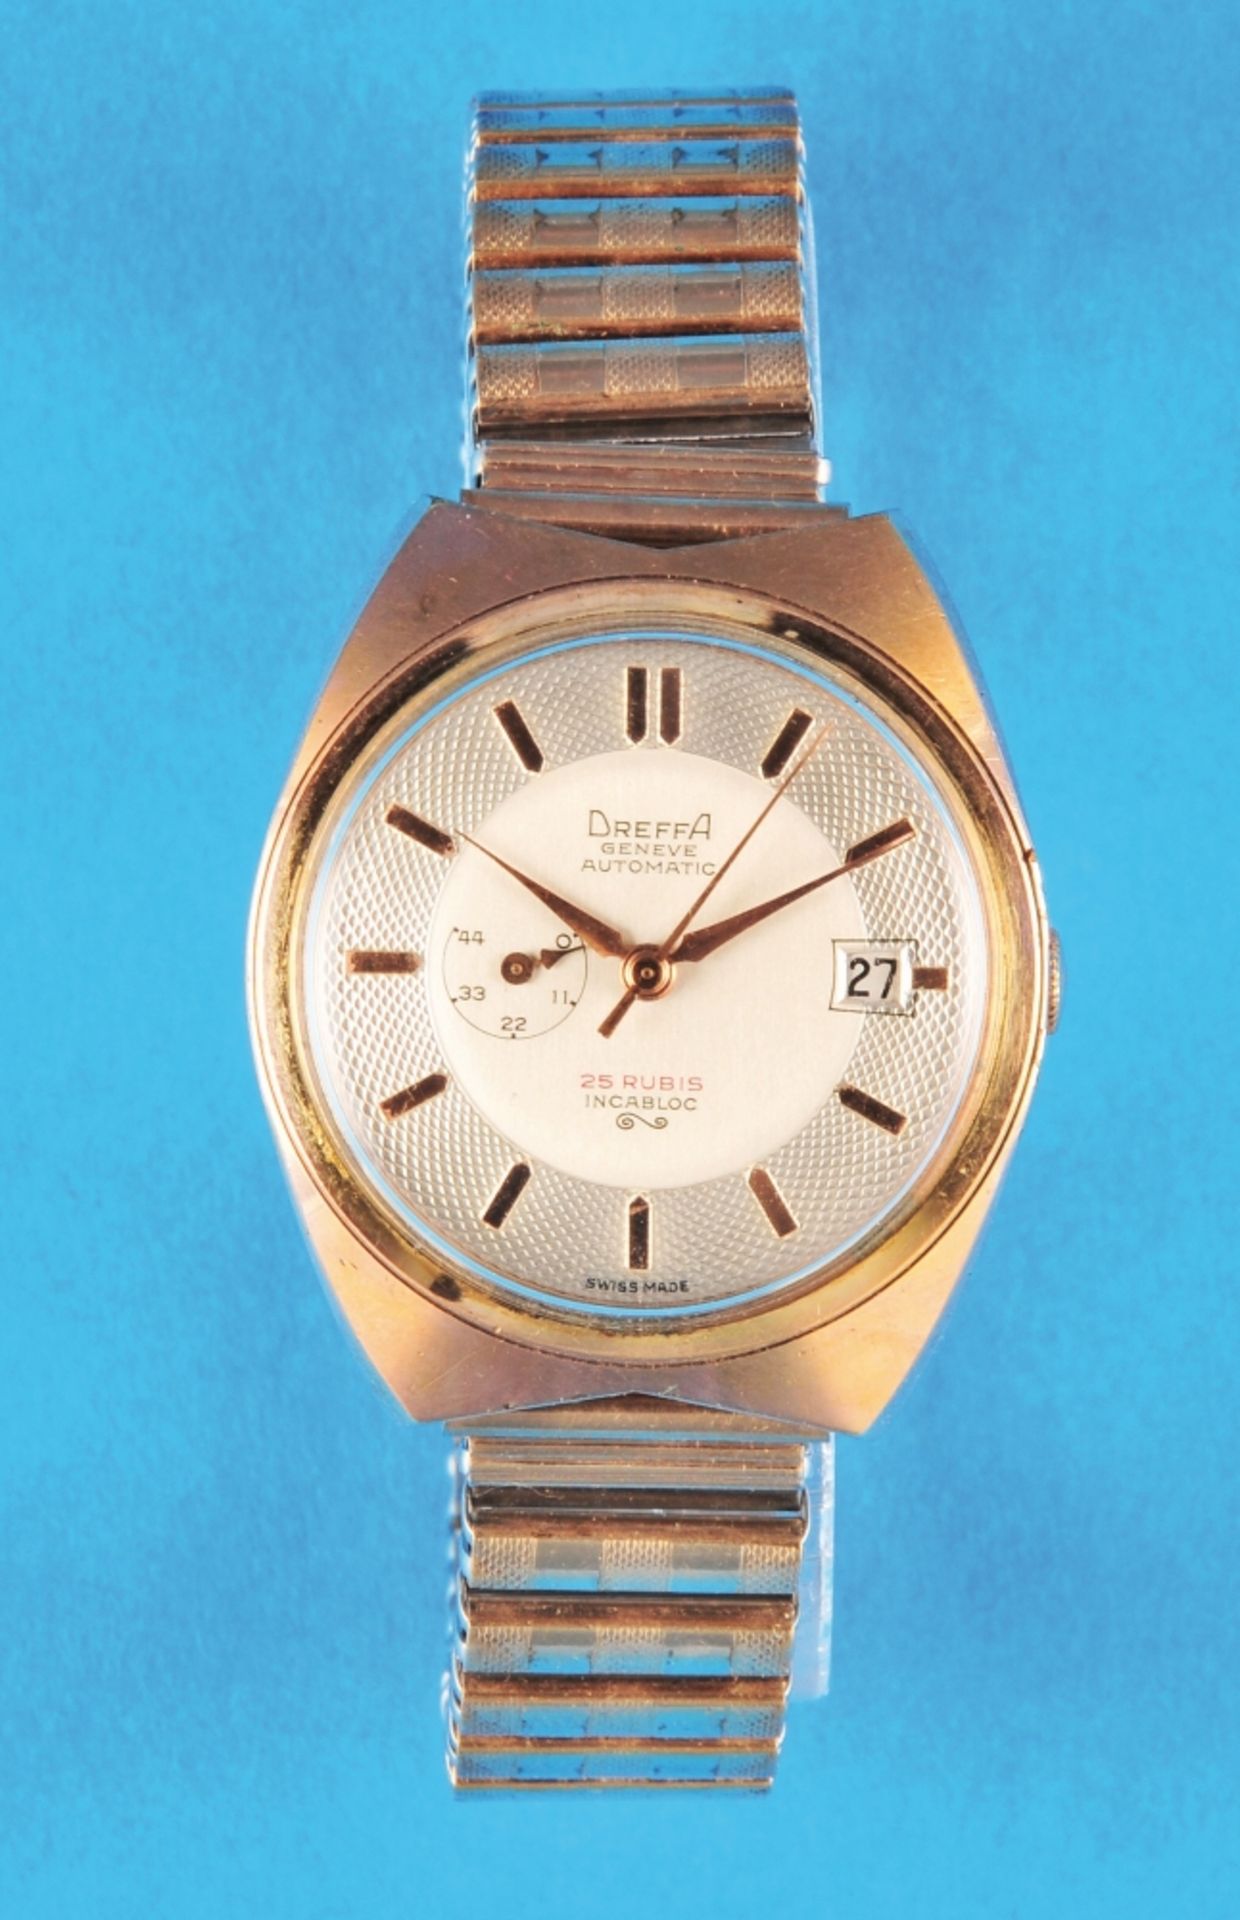 Dreffa Genève Automatic Wristwatch with 44-hour power reserve display